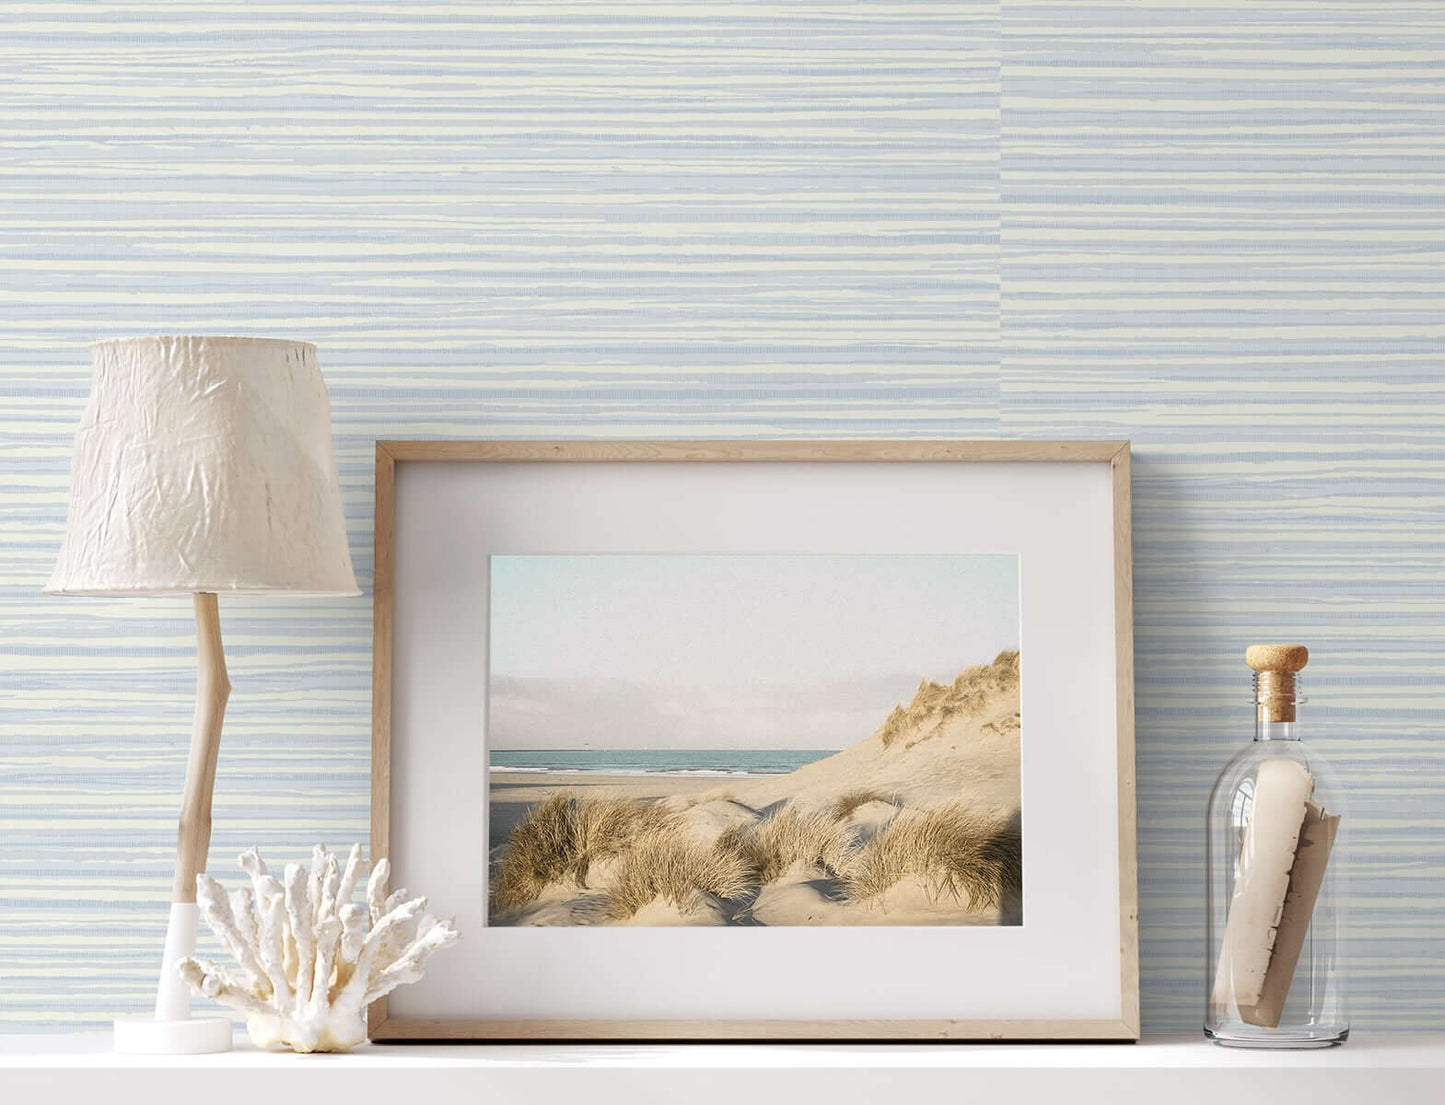 Seabrook Designs The Simple Life Calm Seas Wallpaper - Blue Mist